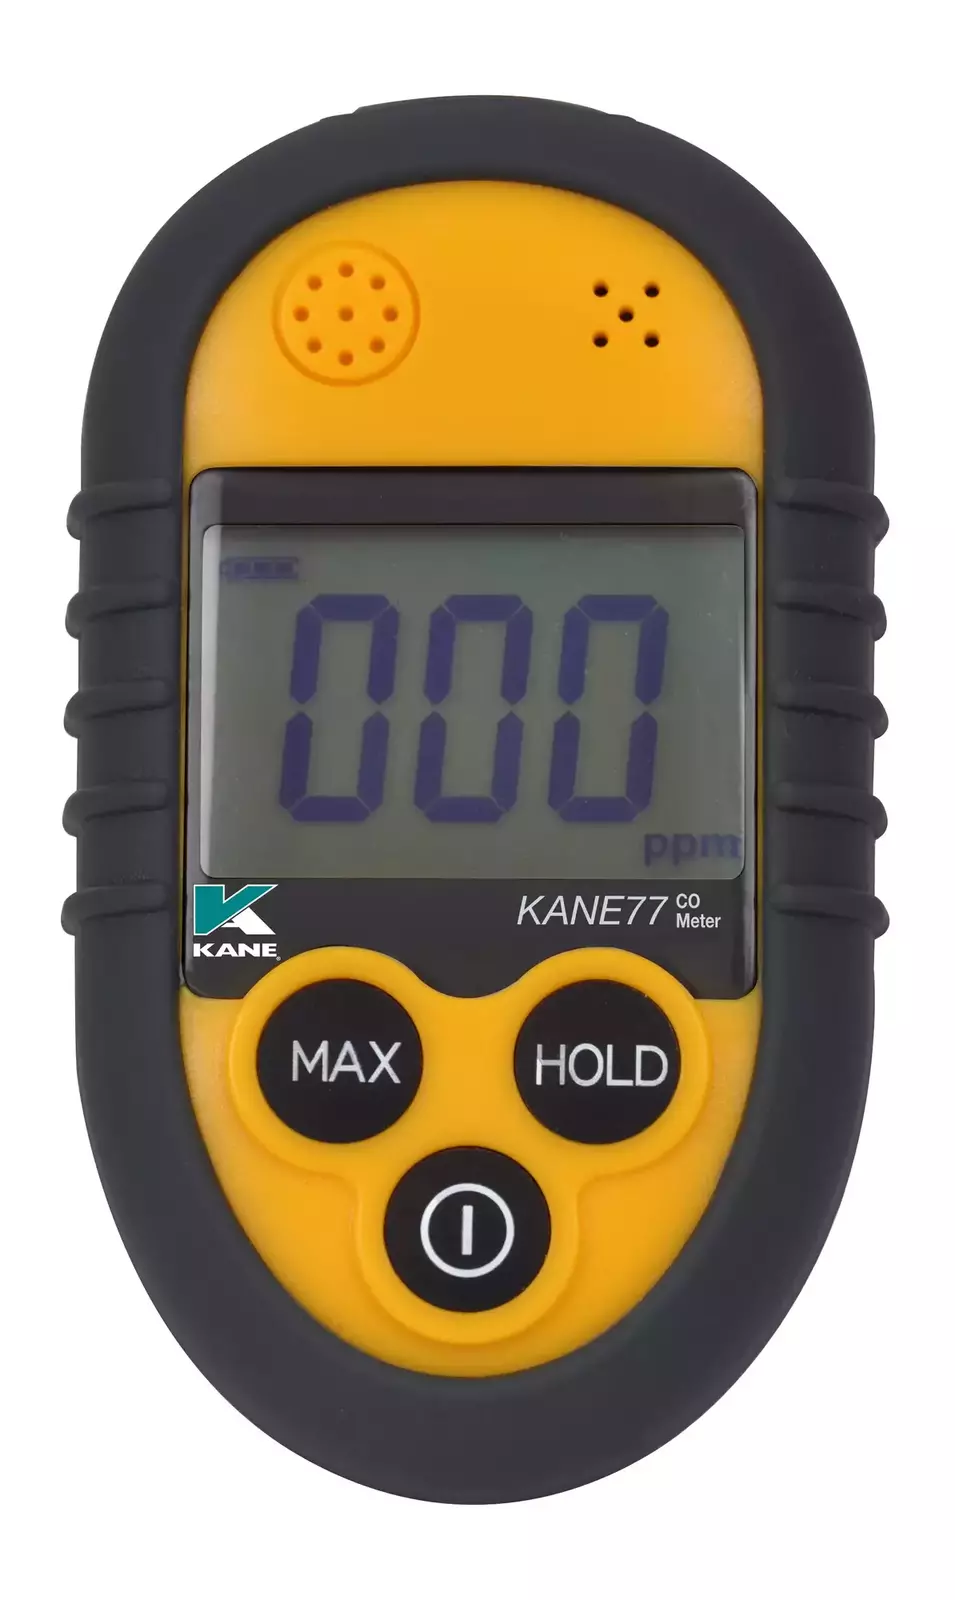 KANE 77 SINGLE GAS SAFETY MONITOR AND ALARM 